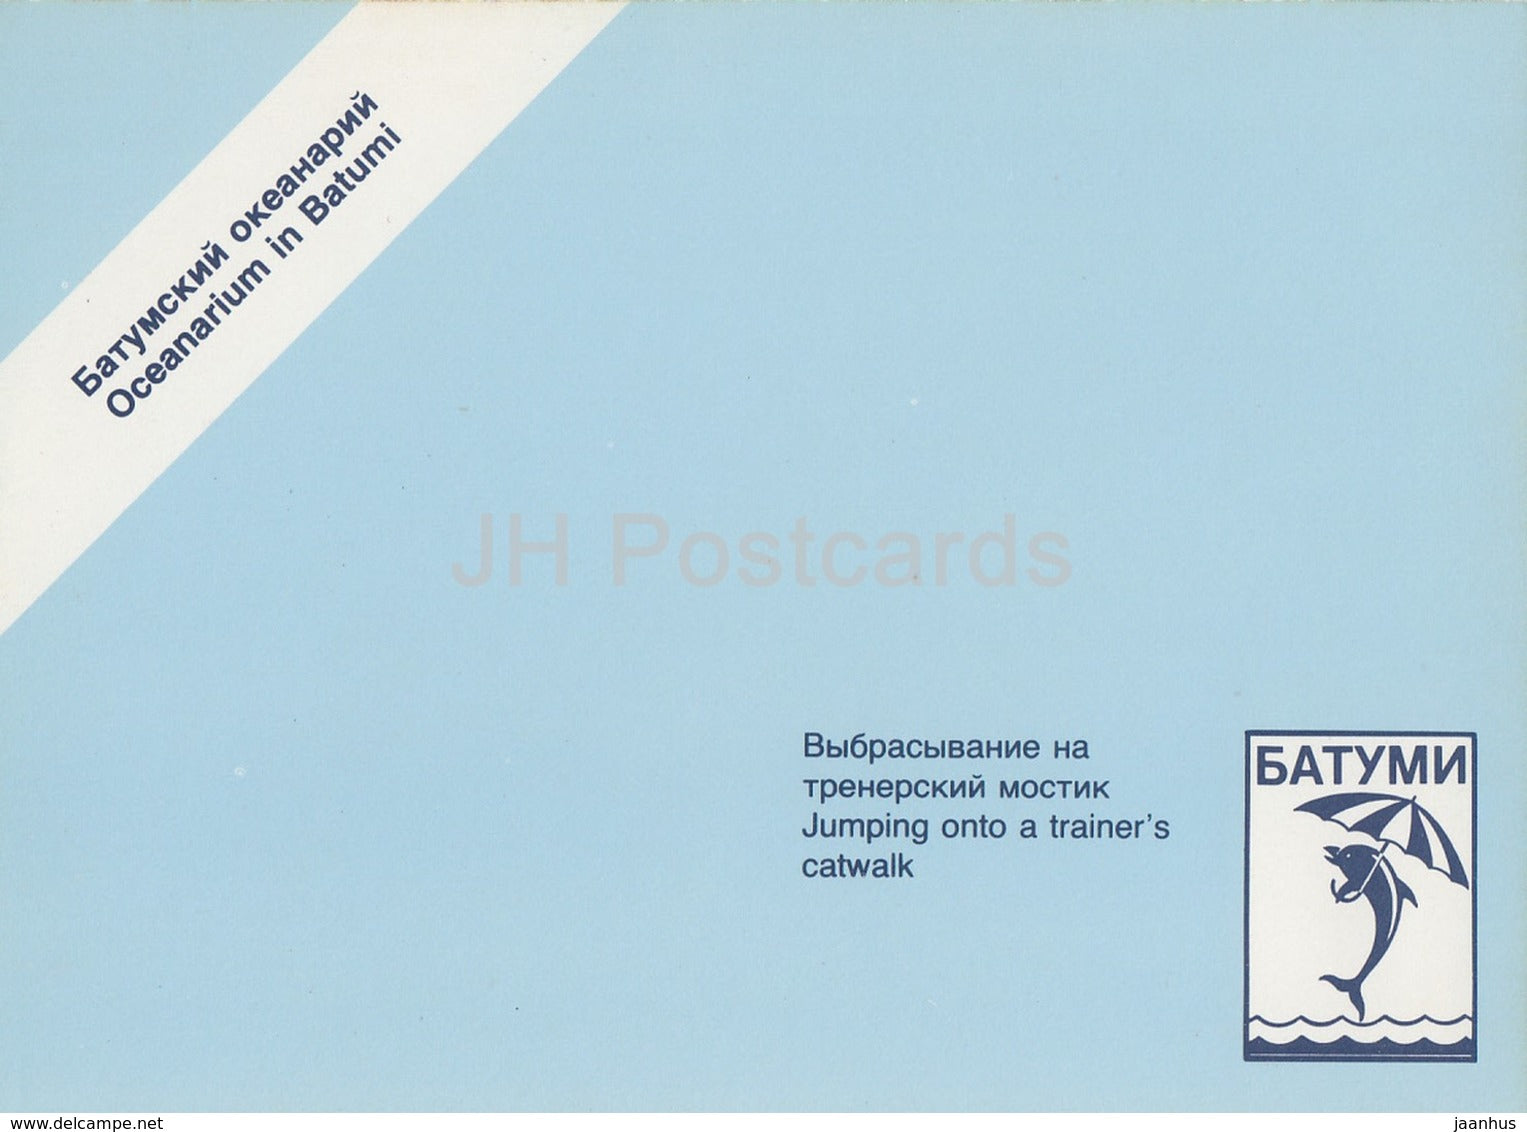 jumping onto a trainers catwalk - dolphins - Oceanarium in Batumi - 1989 - Georgia USSR - unused - JH Postcards